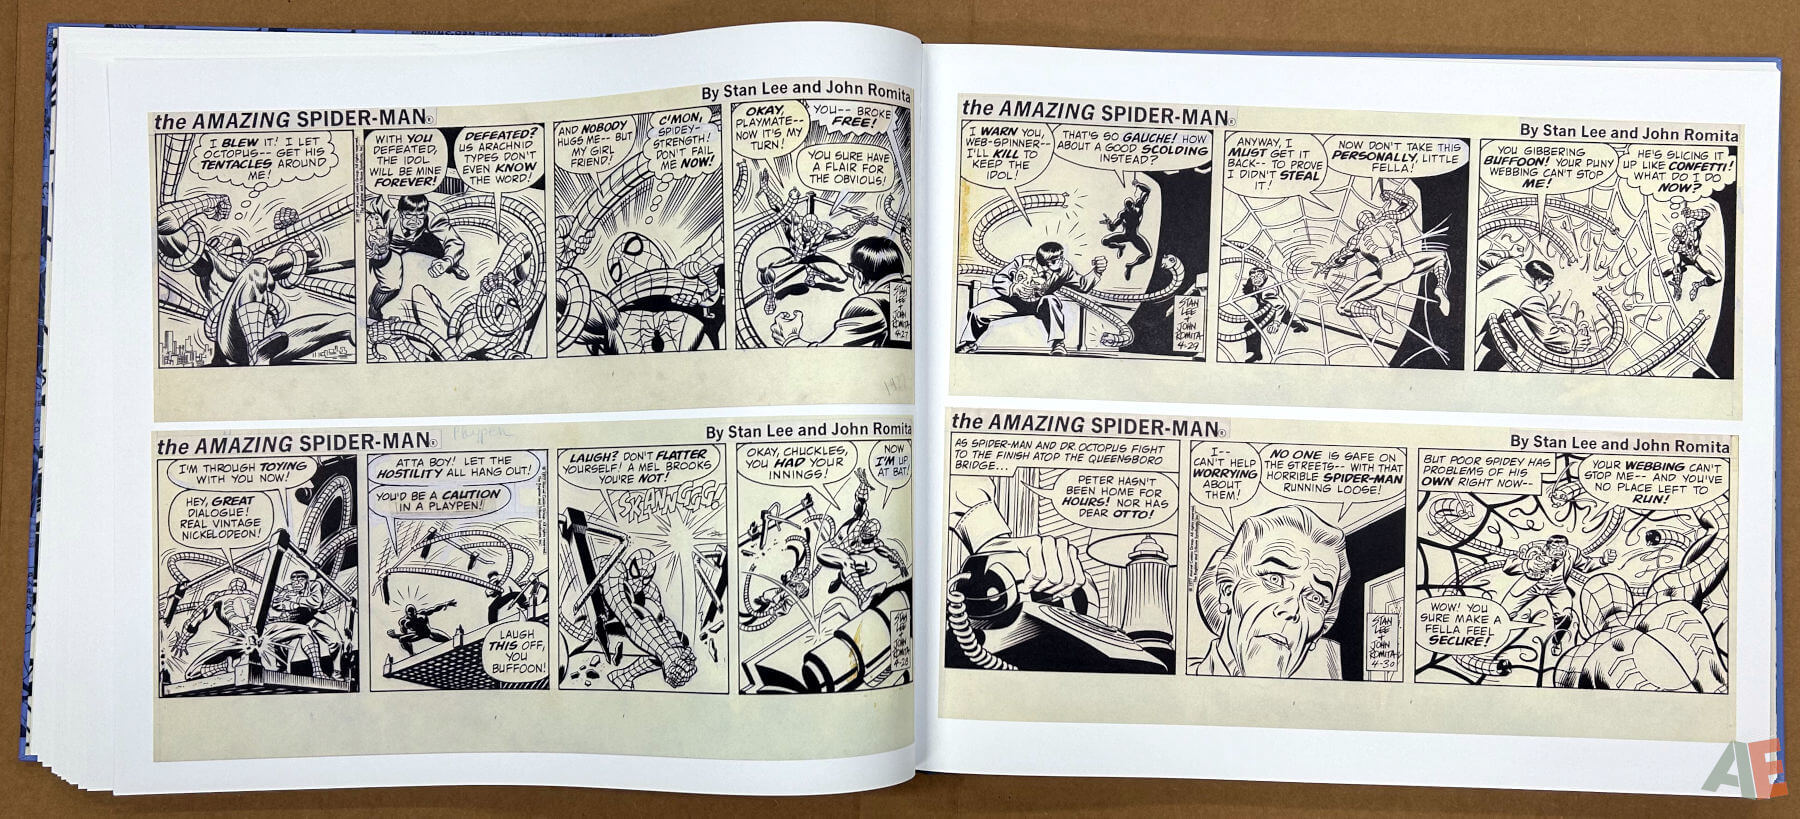 John Romitas Amazing Spider Man The Daily Strips Artists Edition interior 7